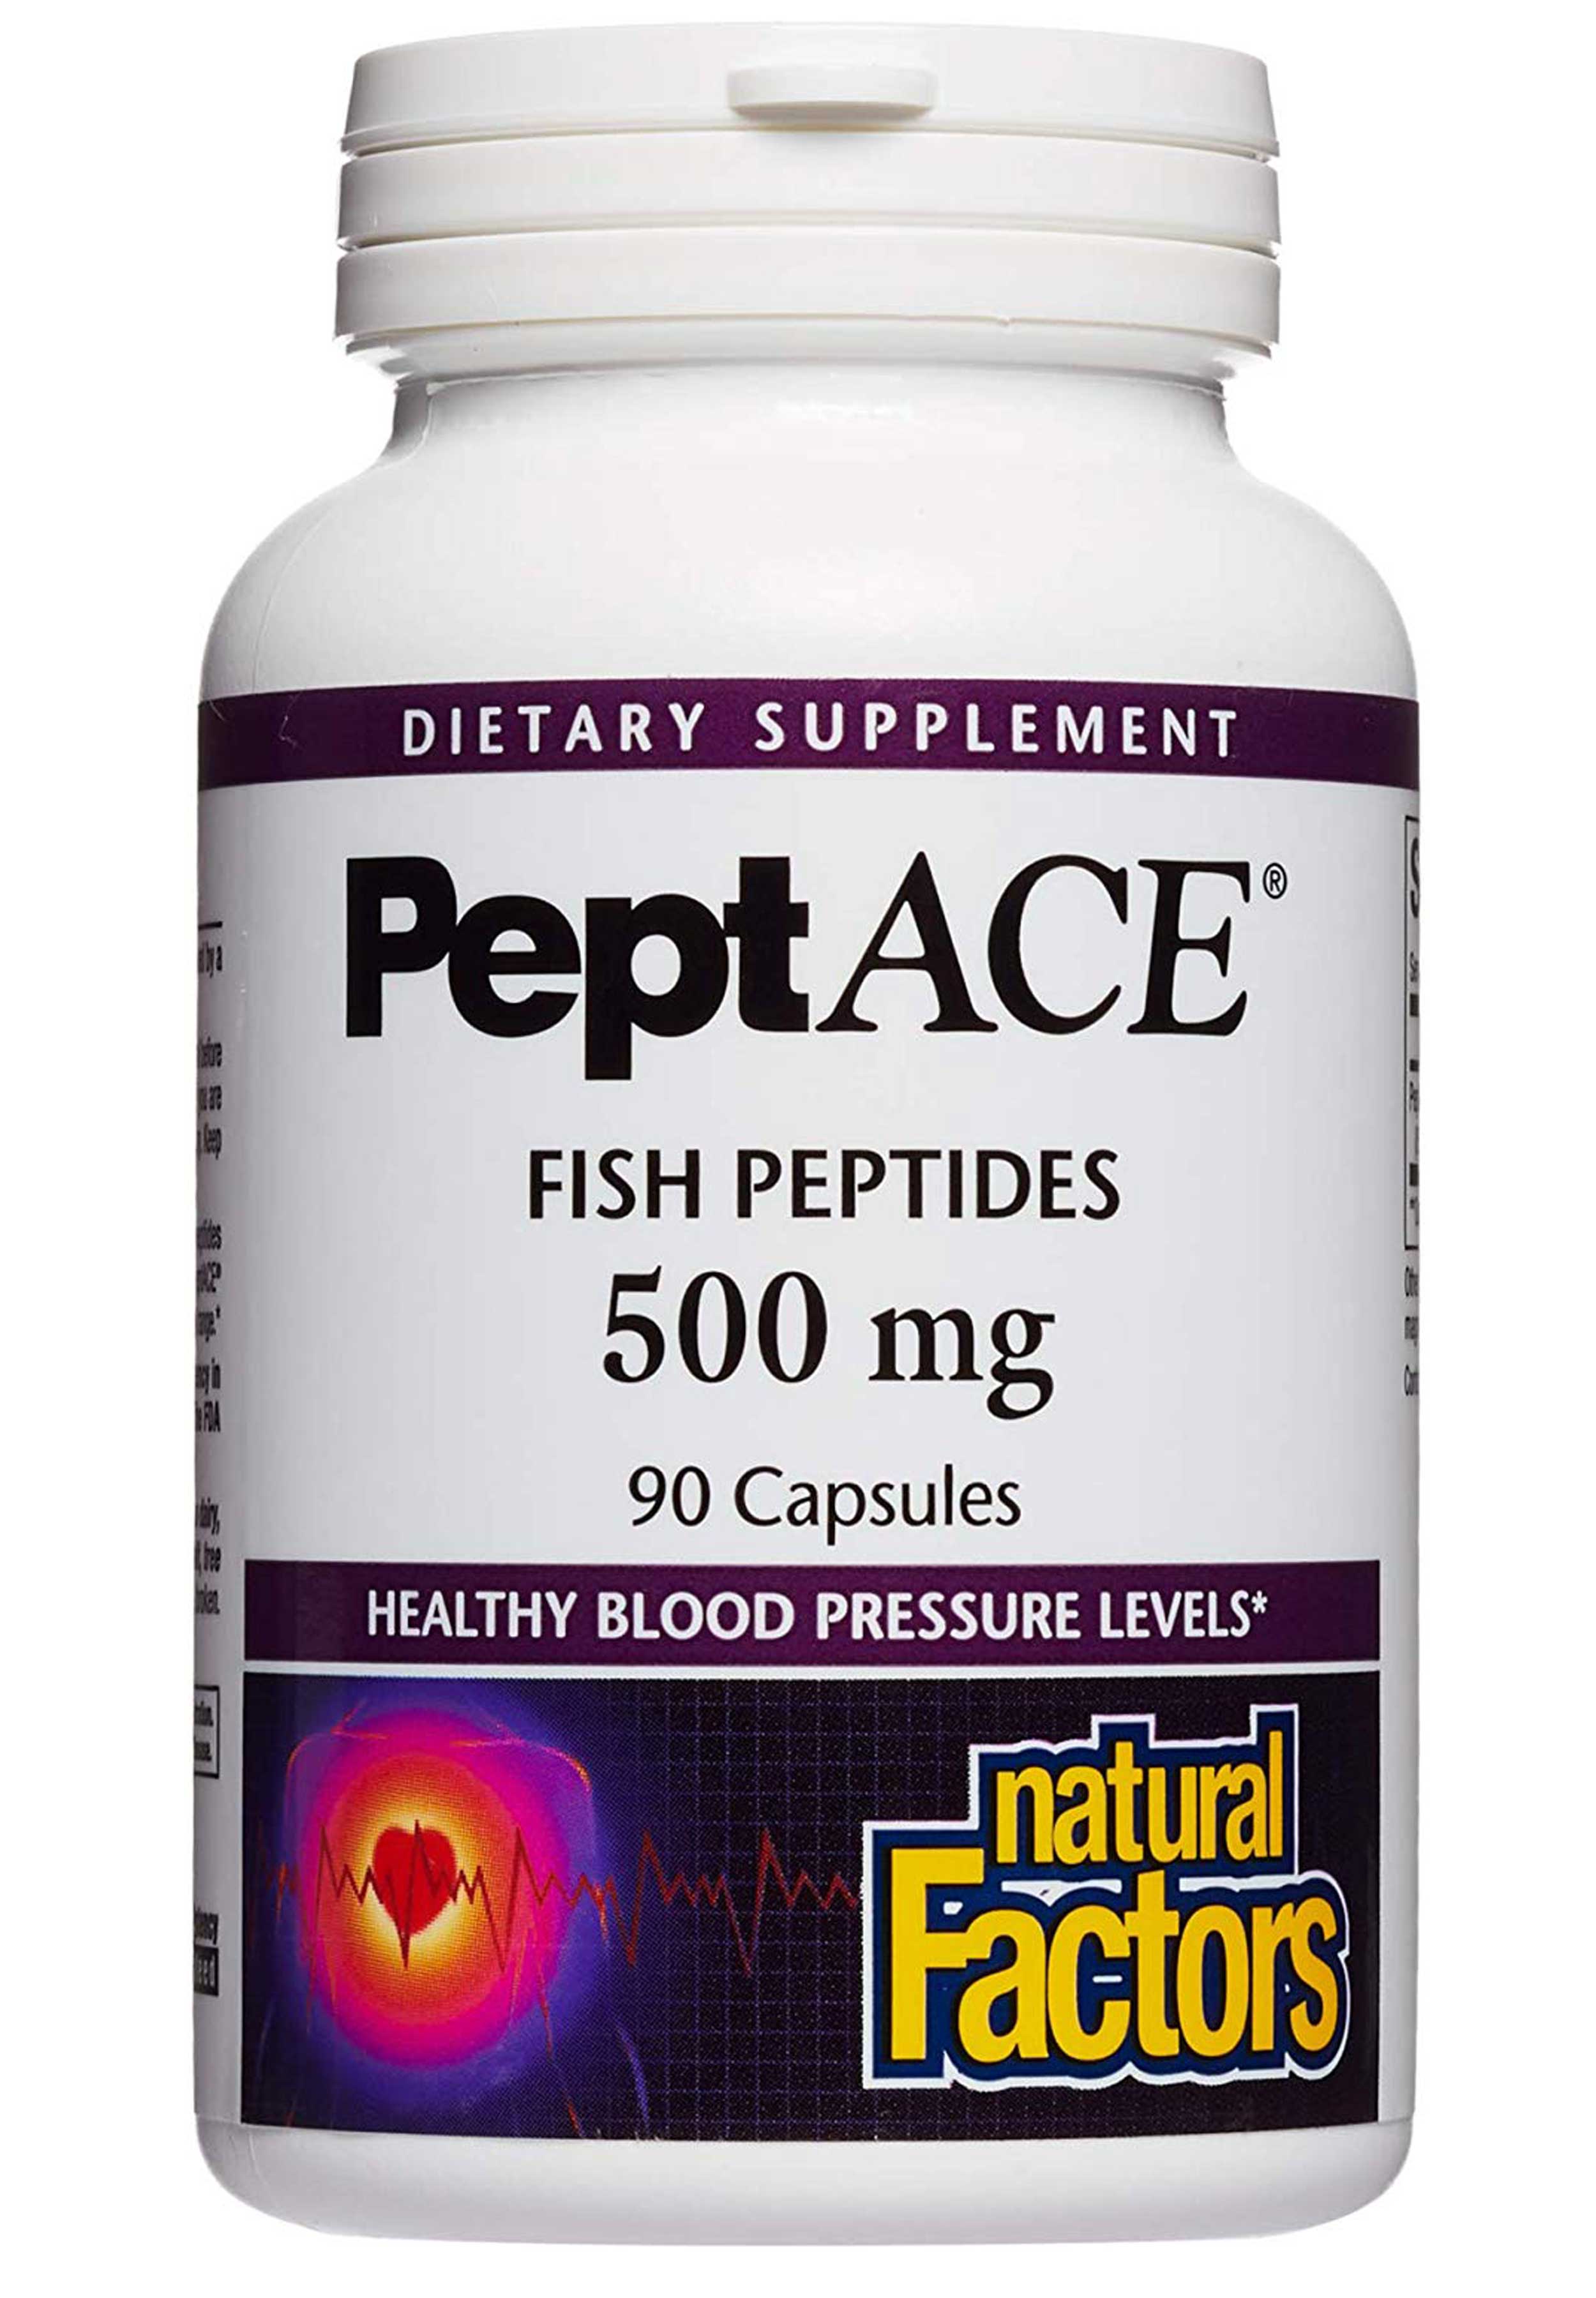 Natural Factors PeptACE Fish Peptides